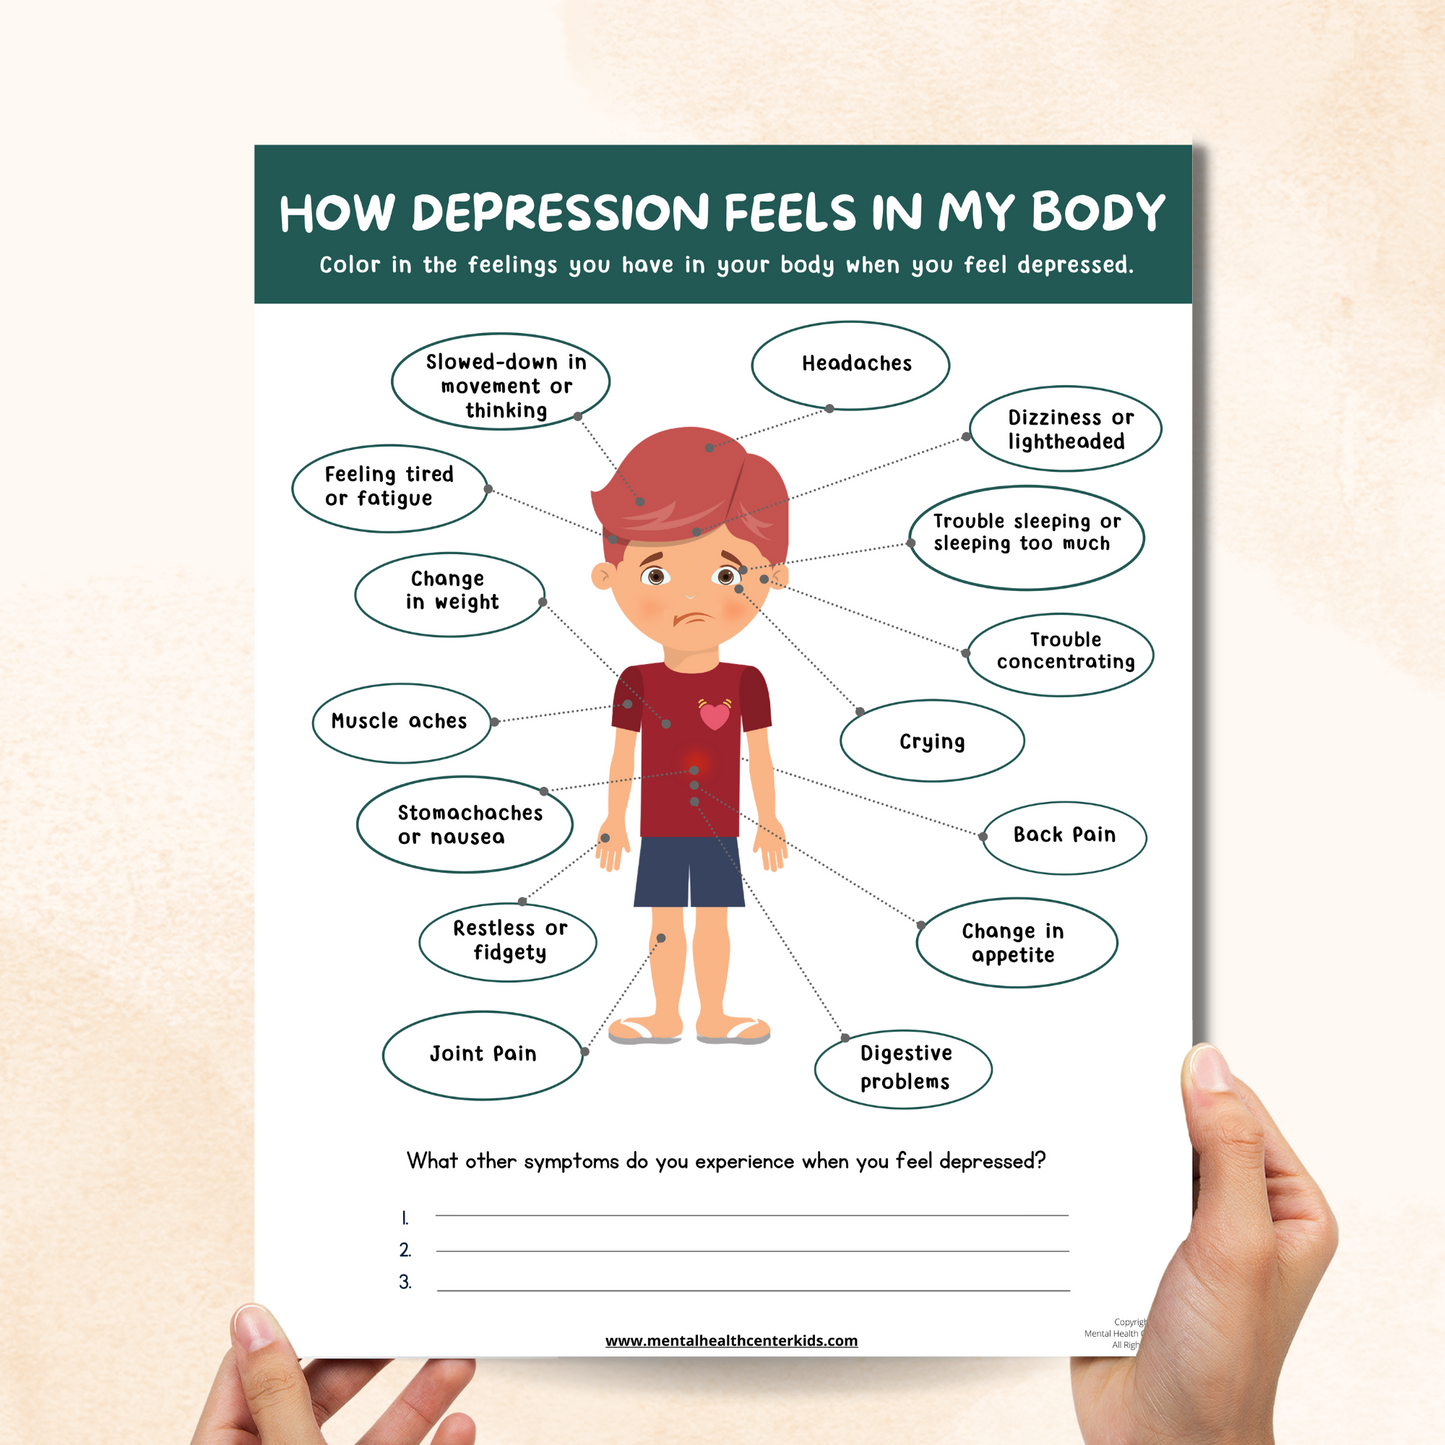 Bodily Symptoms of Depression